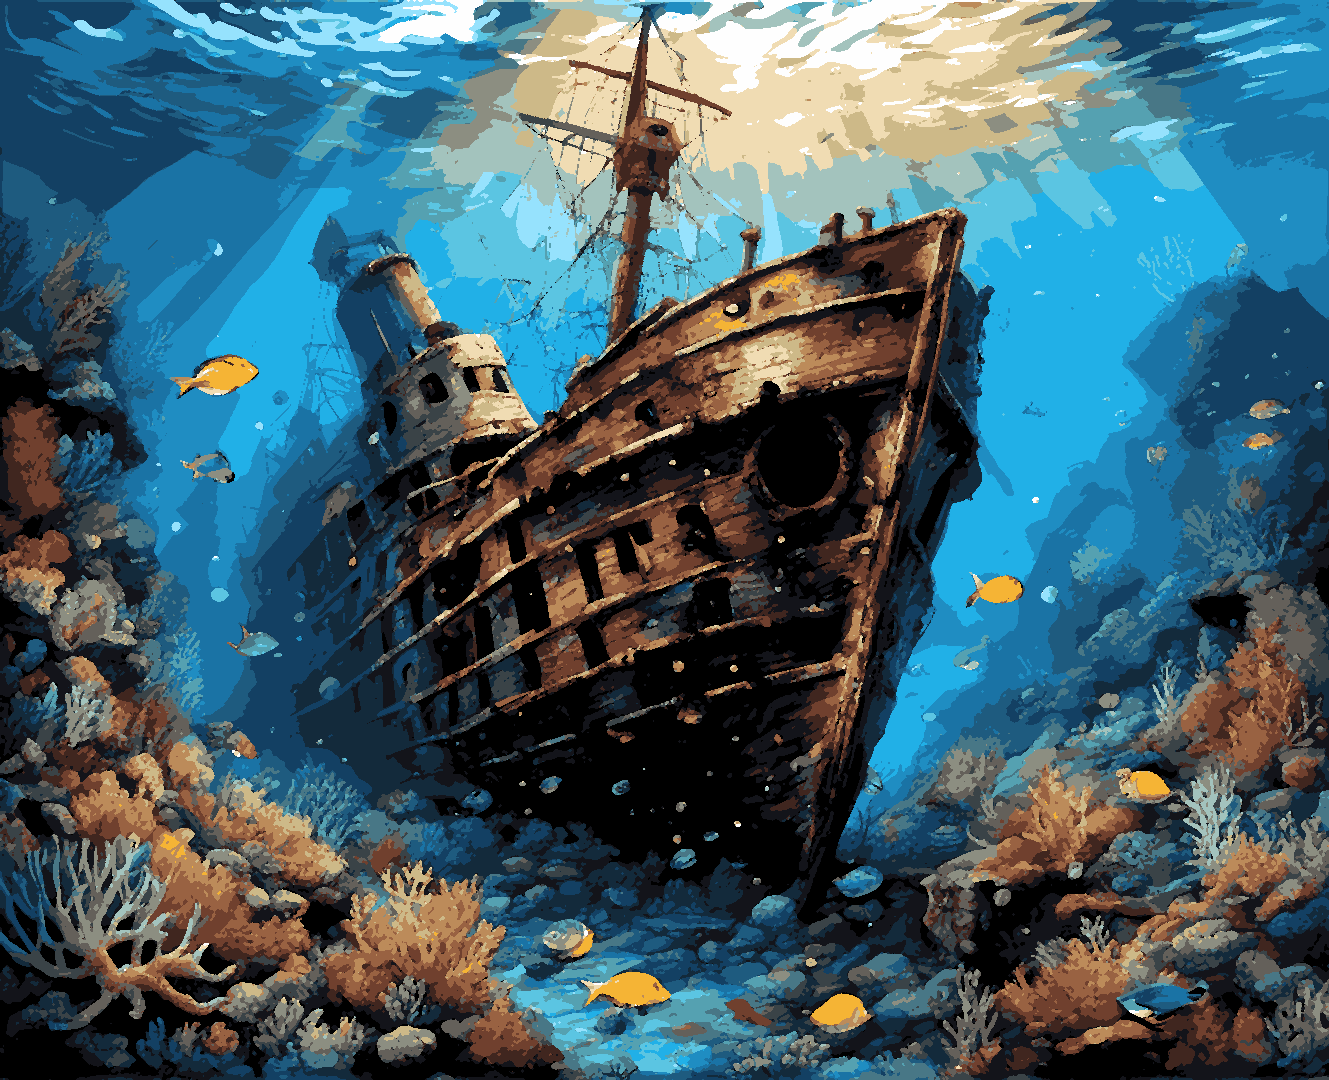 Sunken Shipwreck (3) - Van-Go Paint-By-Number Kit